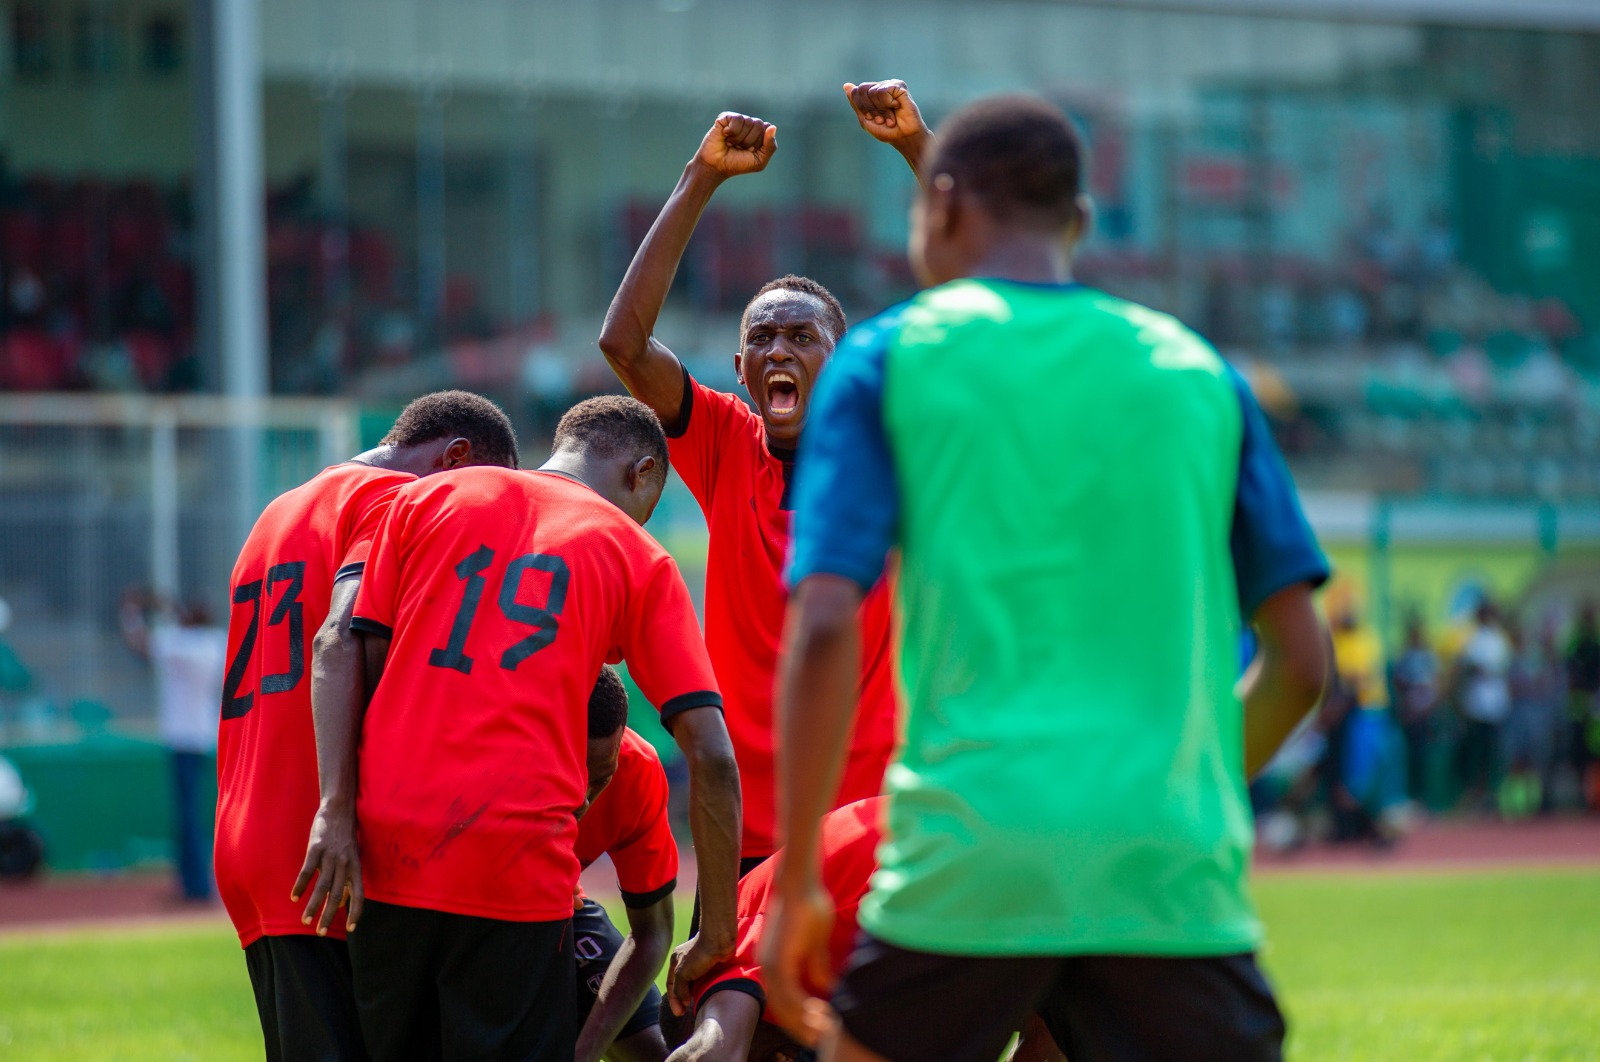 NPFL Youth League: Katsina United return to winning ways as Plateau United, Rivers United share spoils